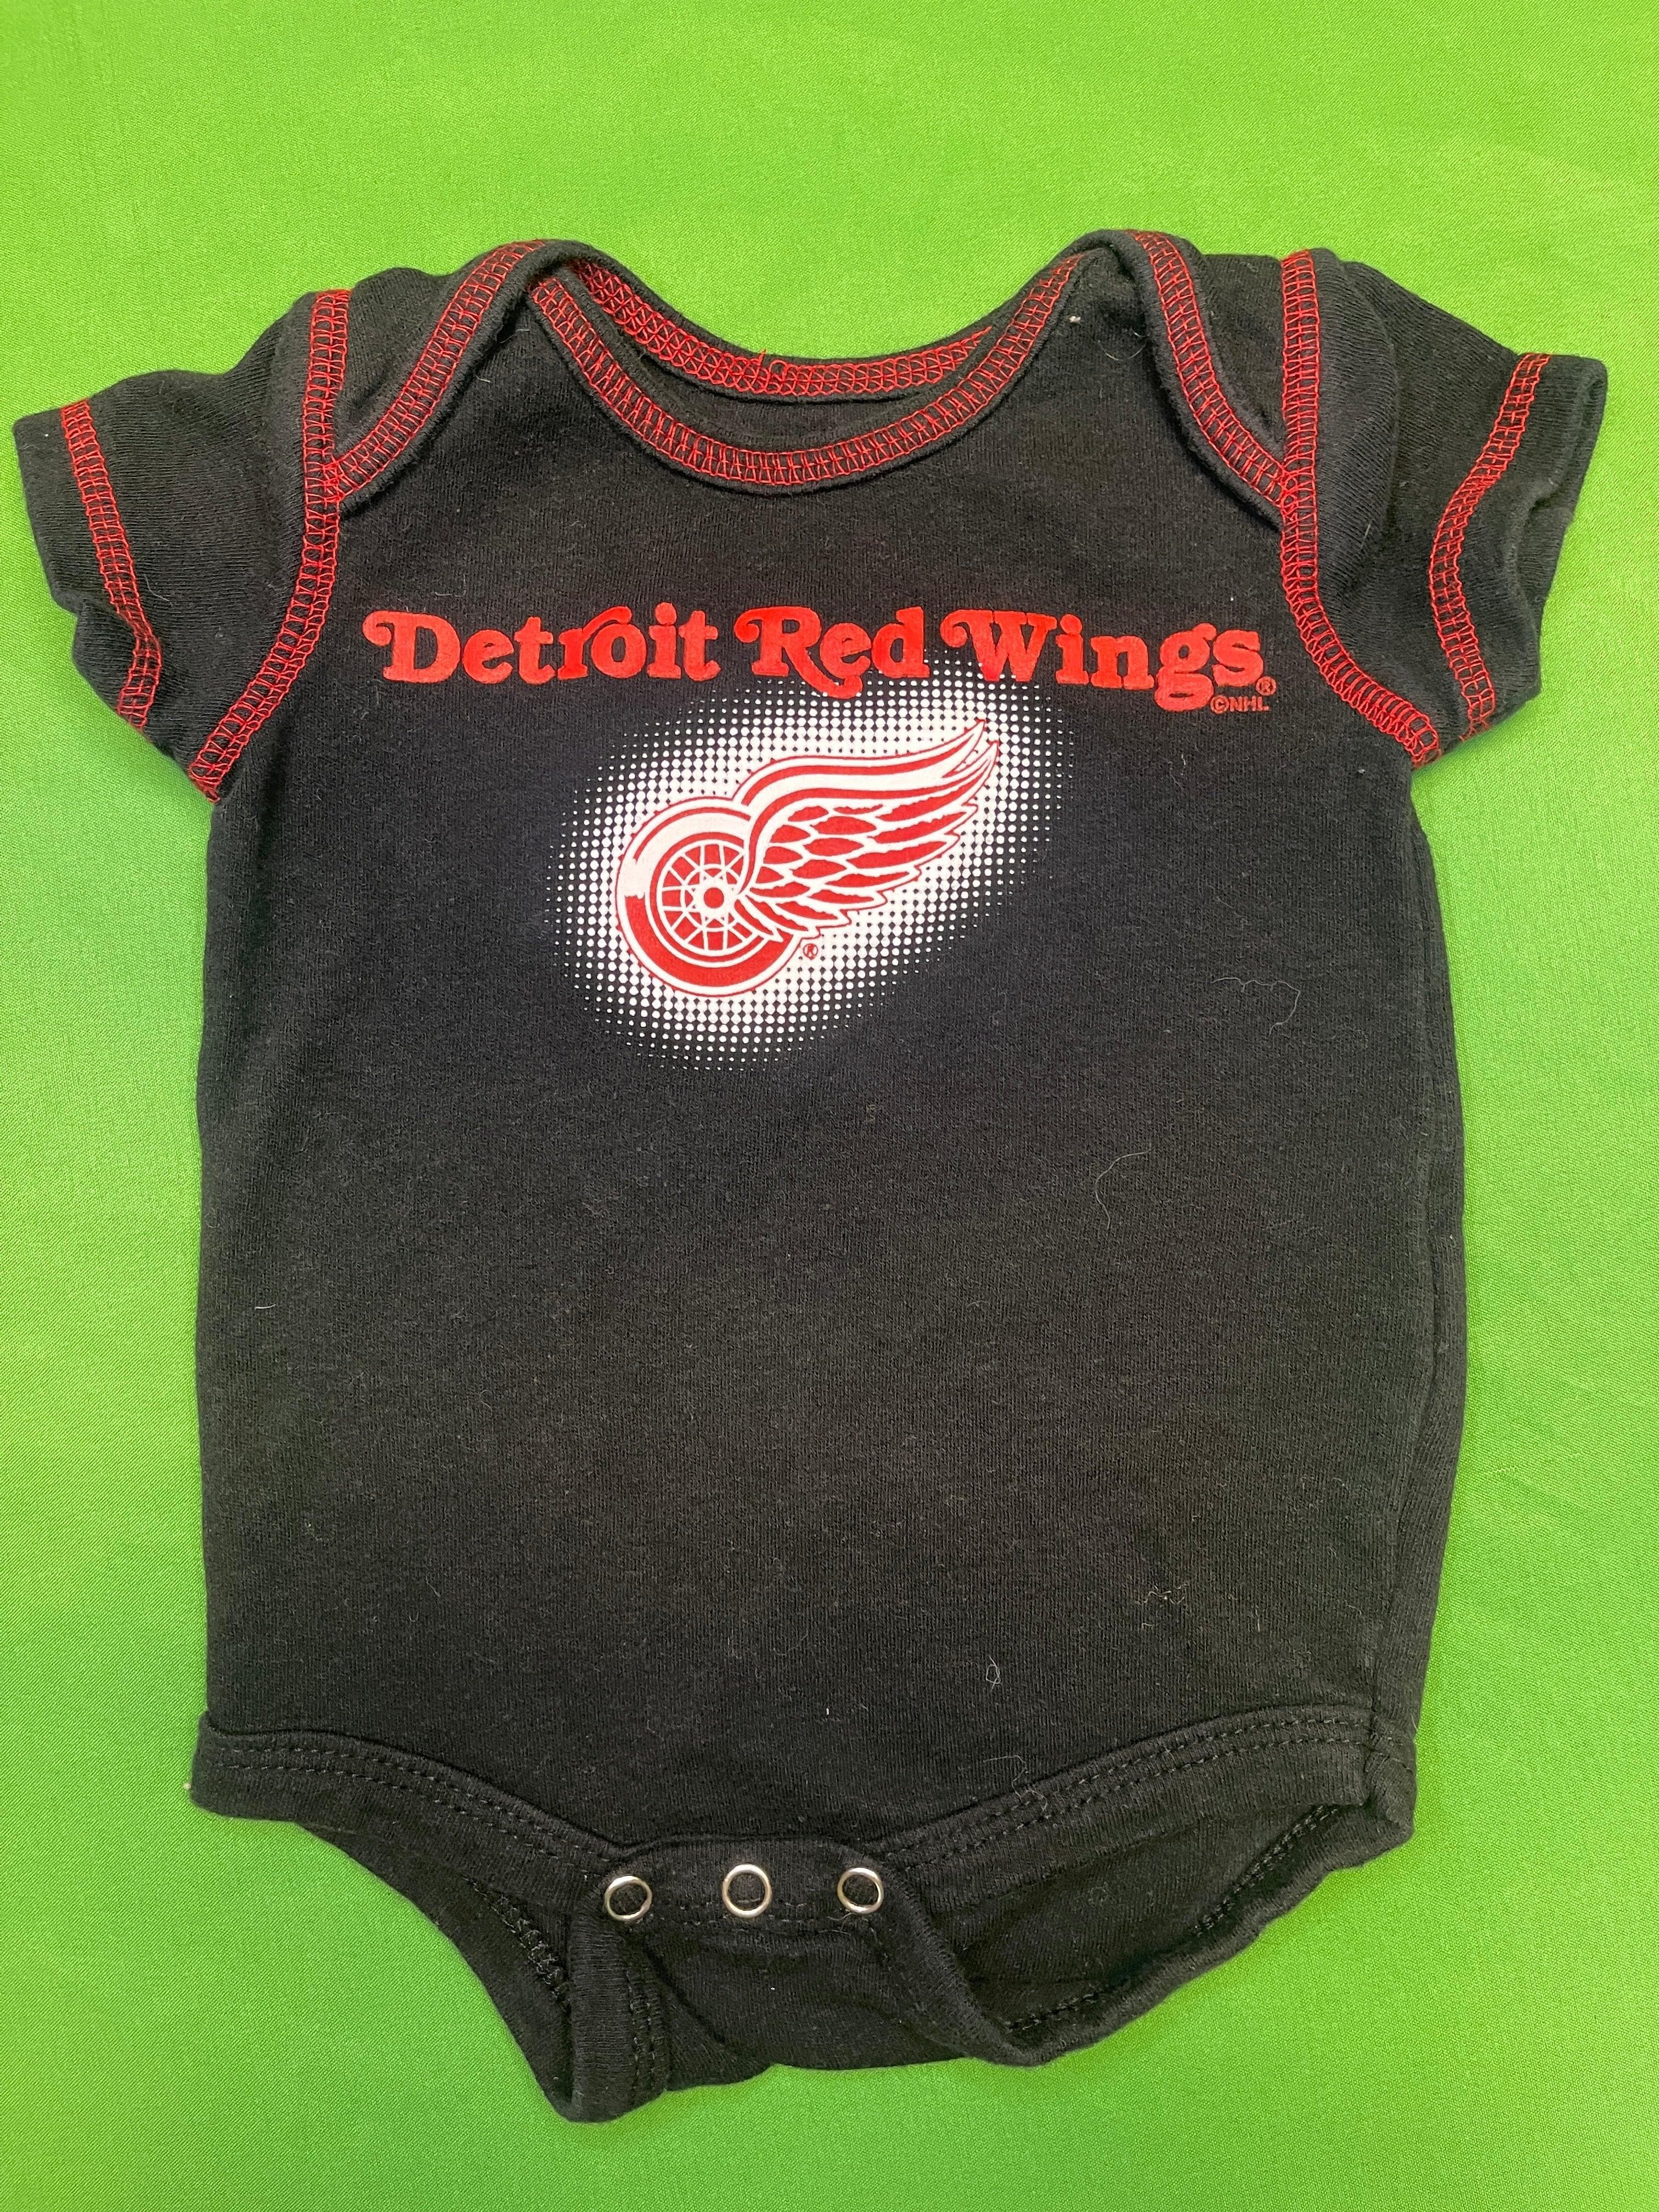 Detroit Red Wings baby gear